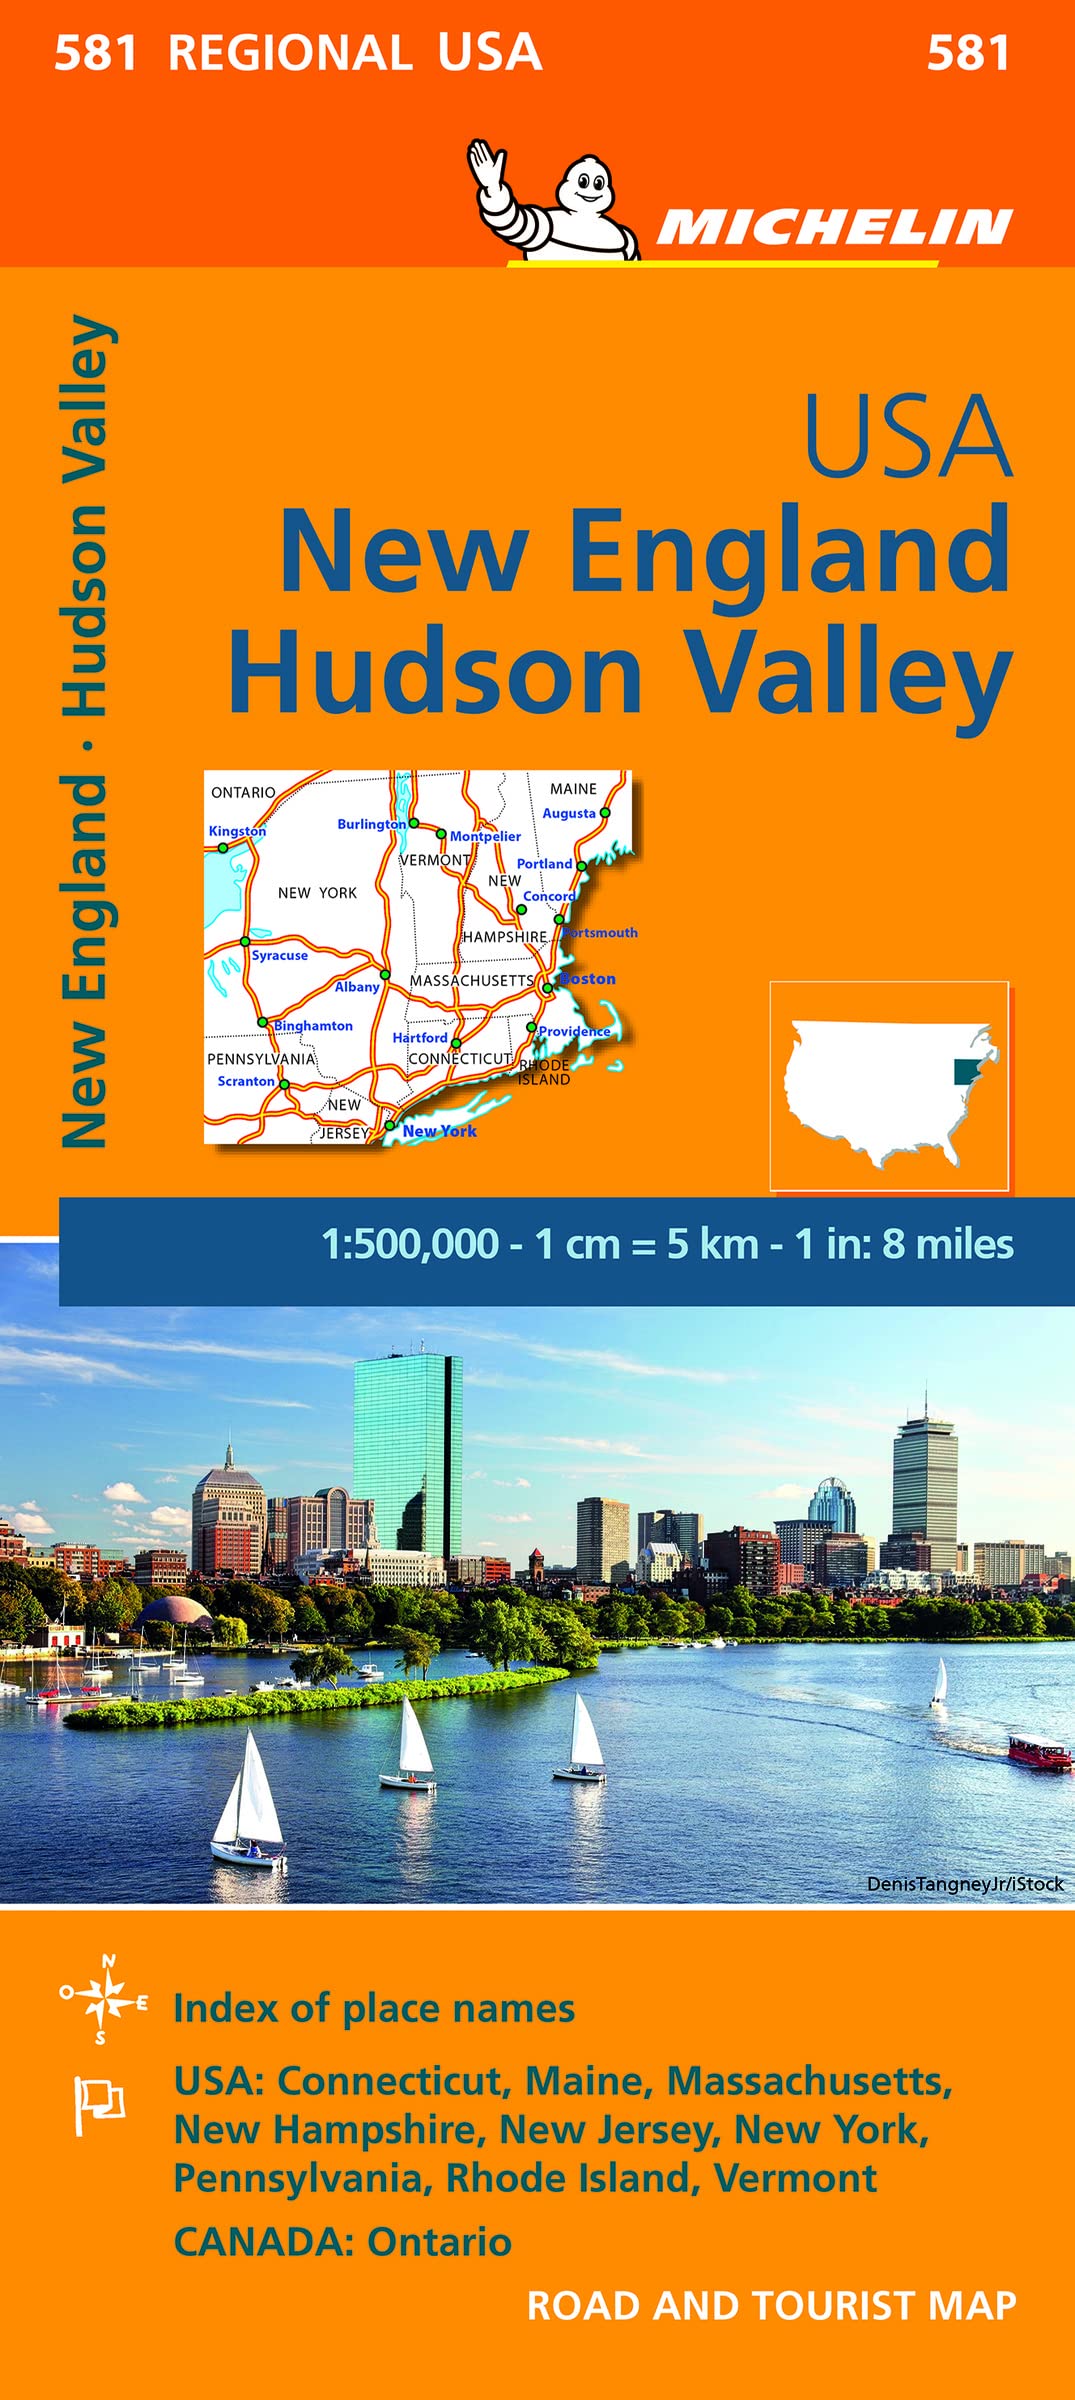 U.S.A New England, Hudson Valley